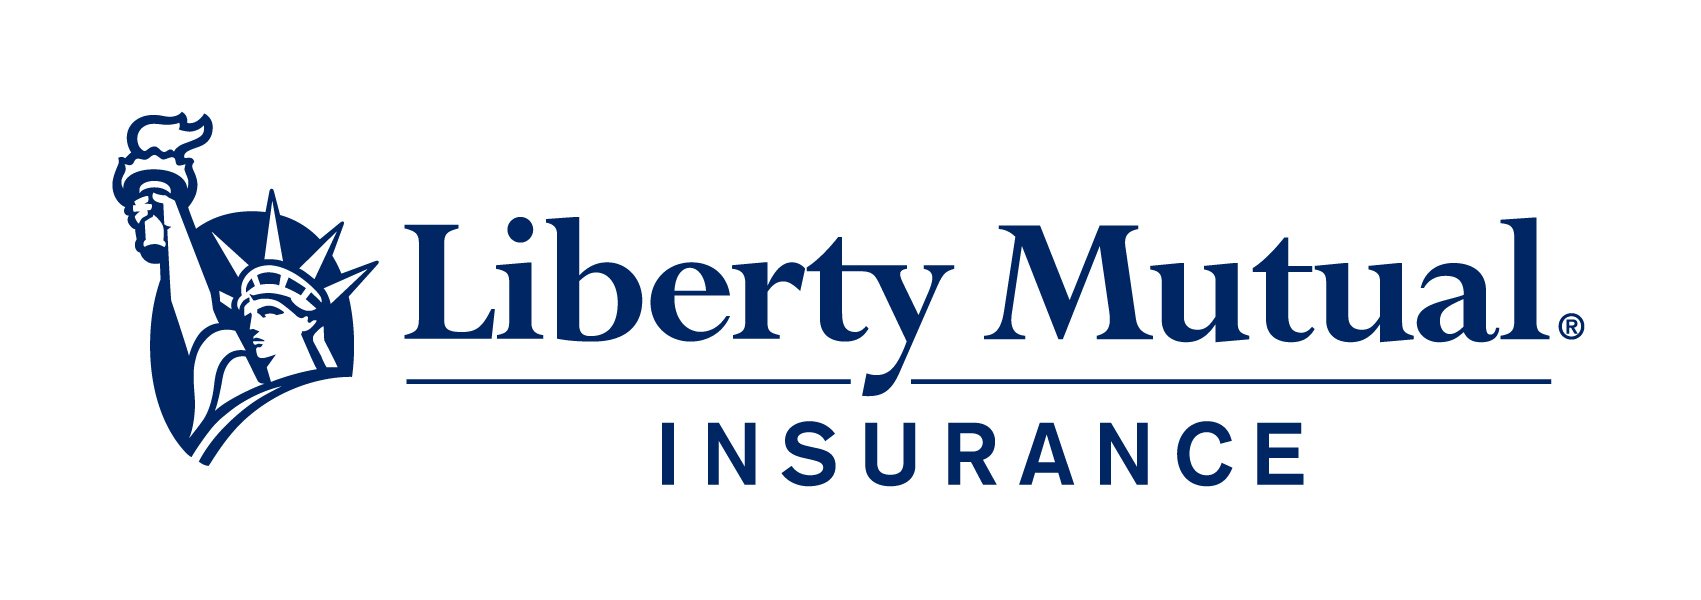 Liberty-mutual-logo.jpg